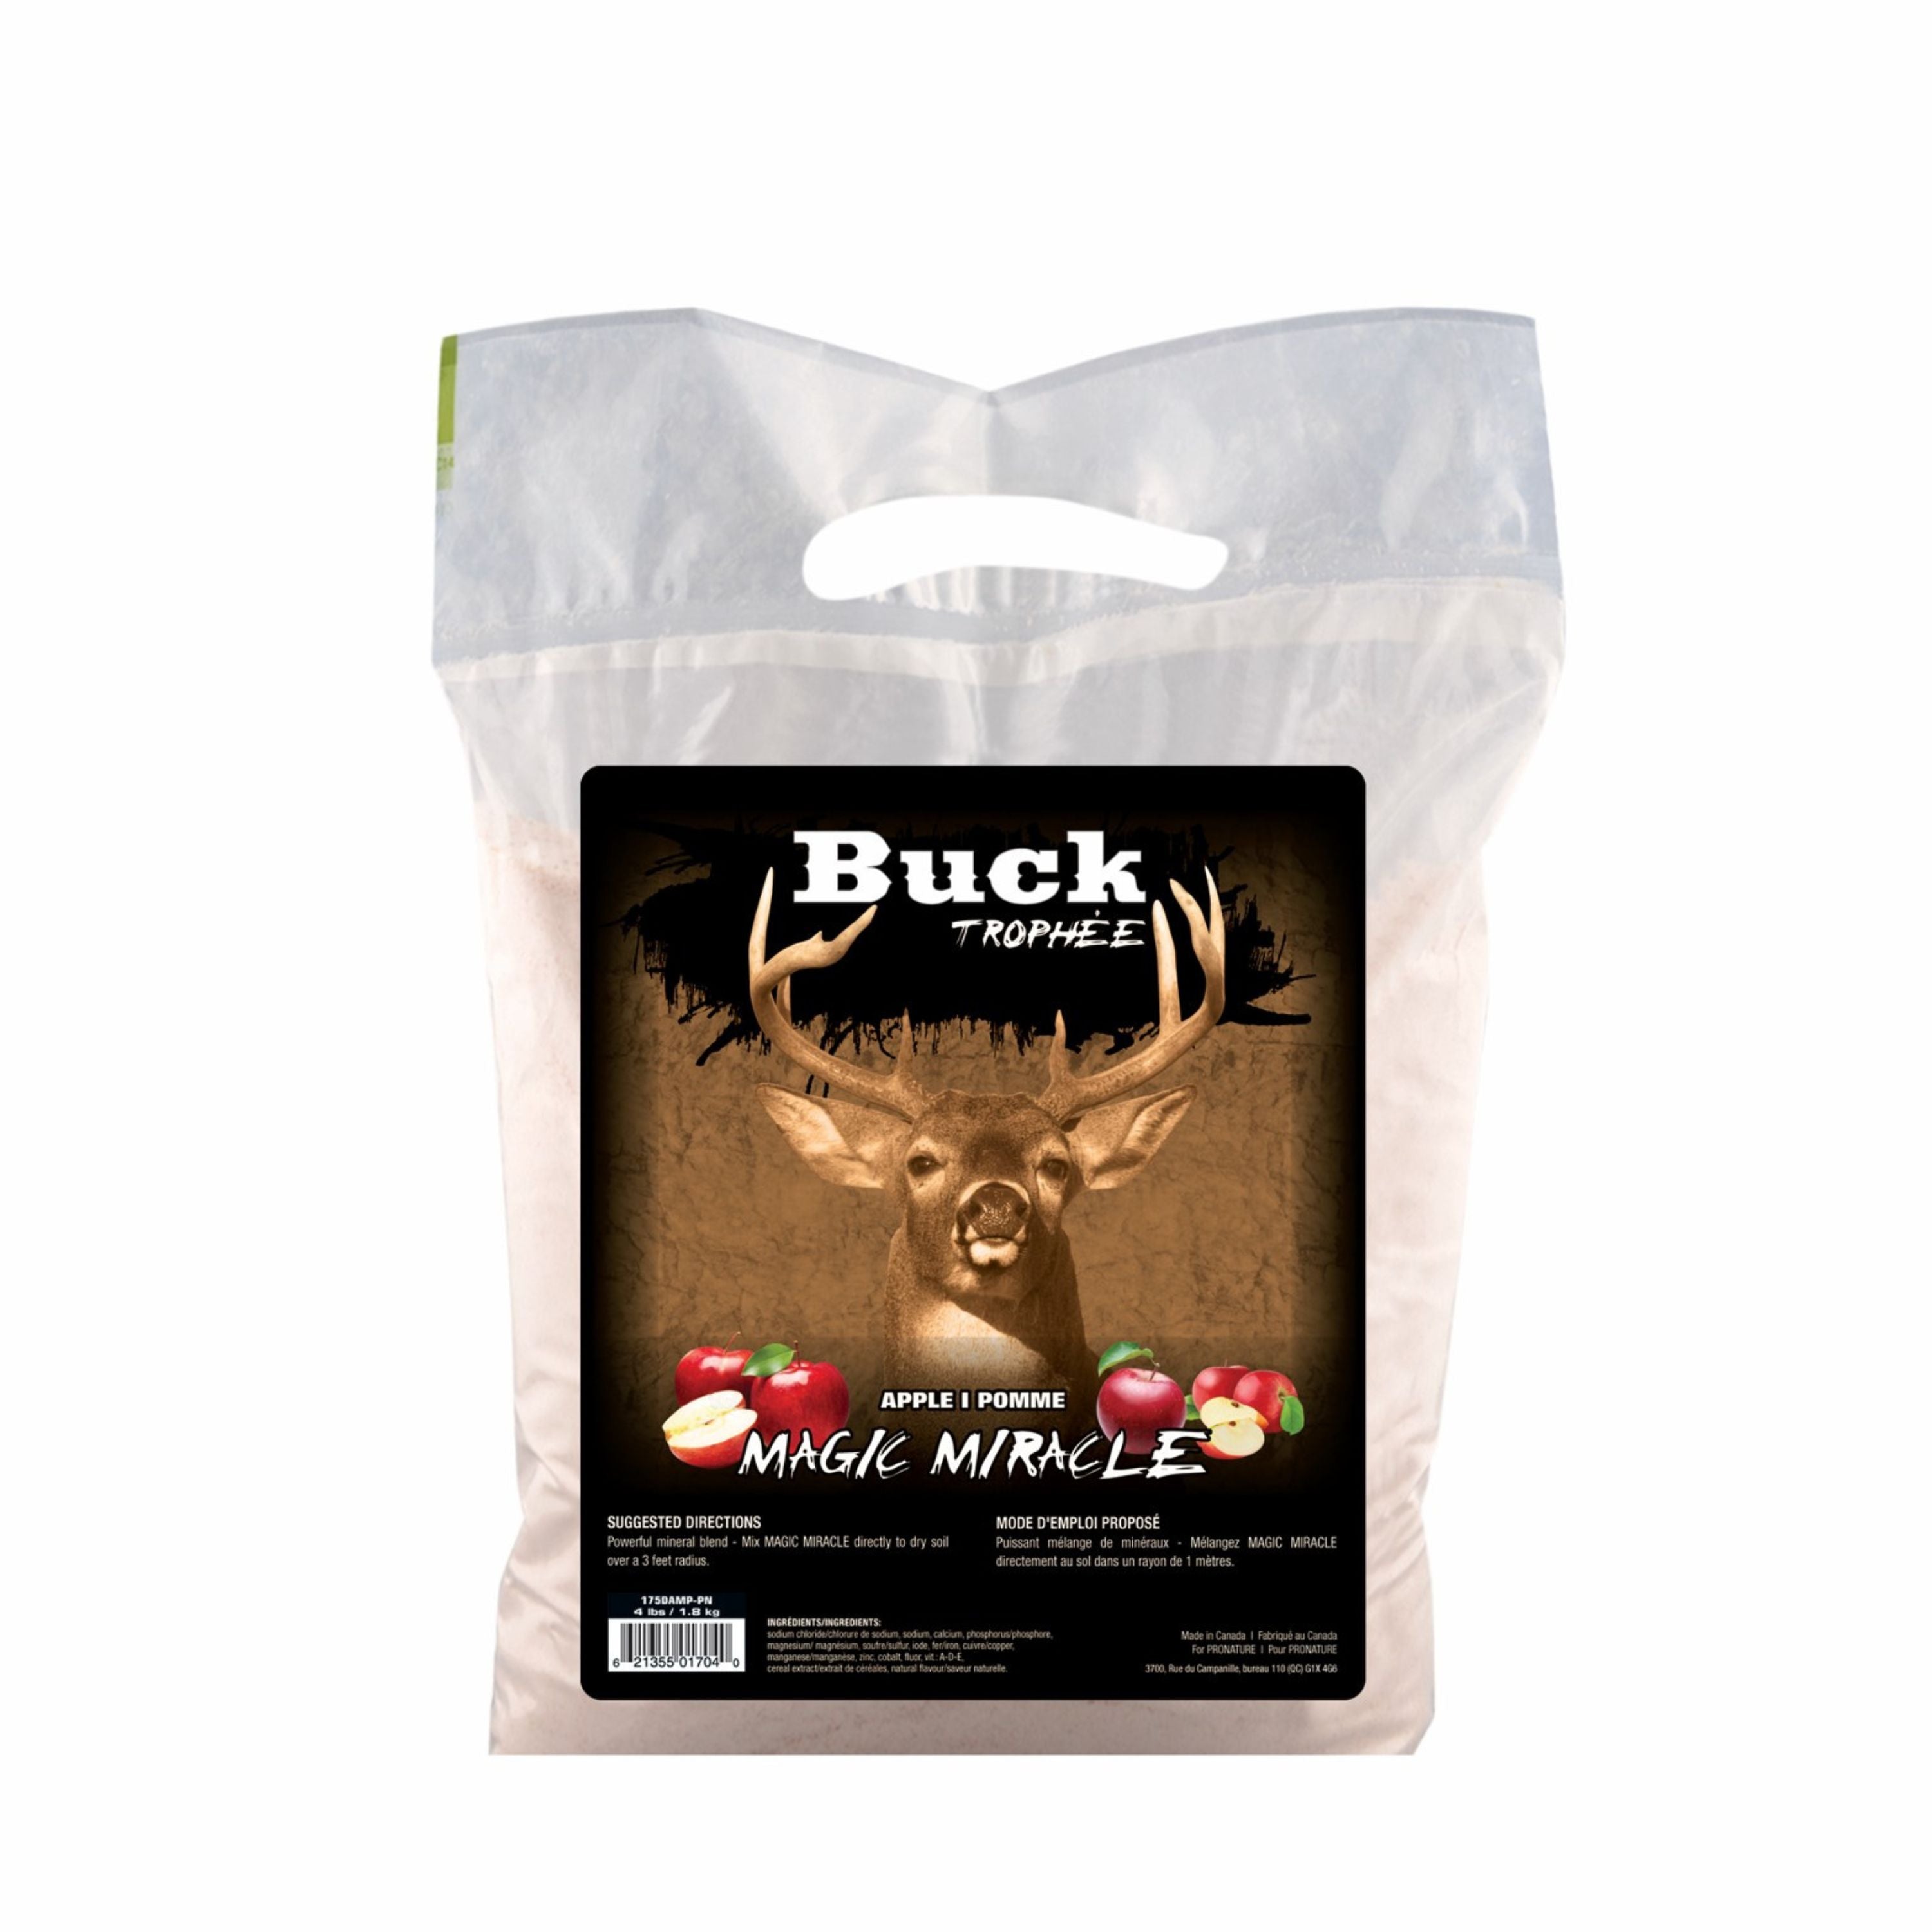 “Magic miracle” Deer Apple Flavor Volatile Powder - 1.8kg